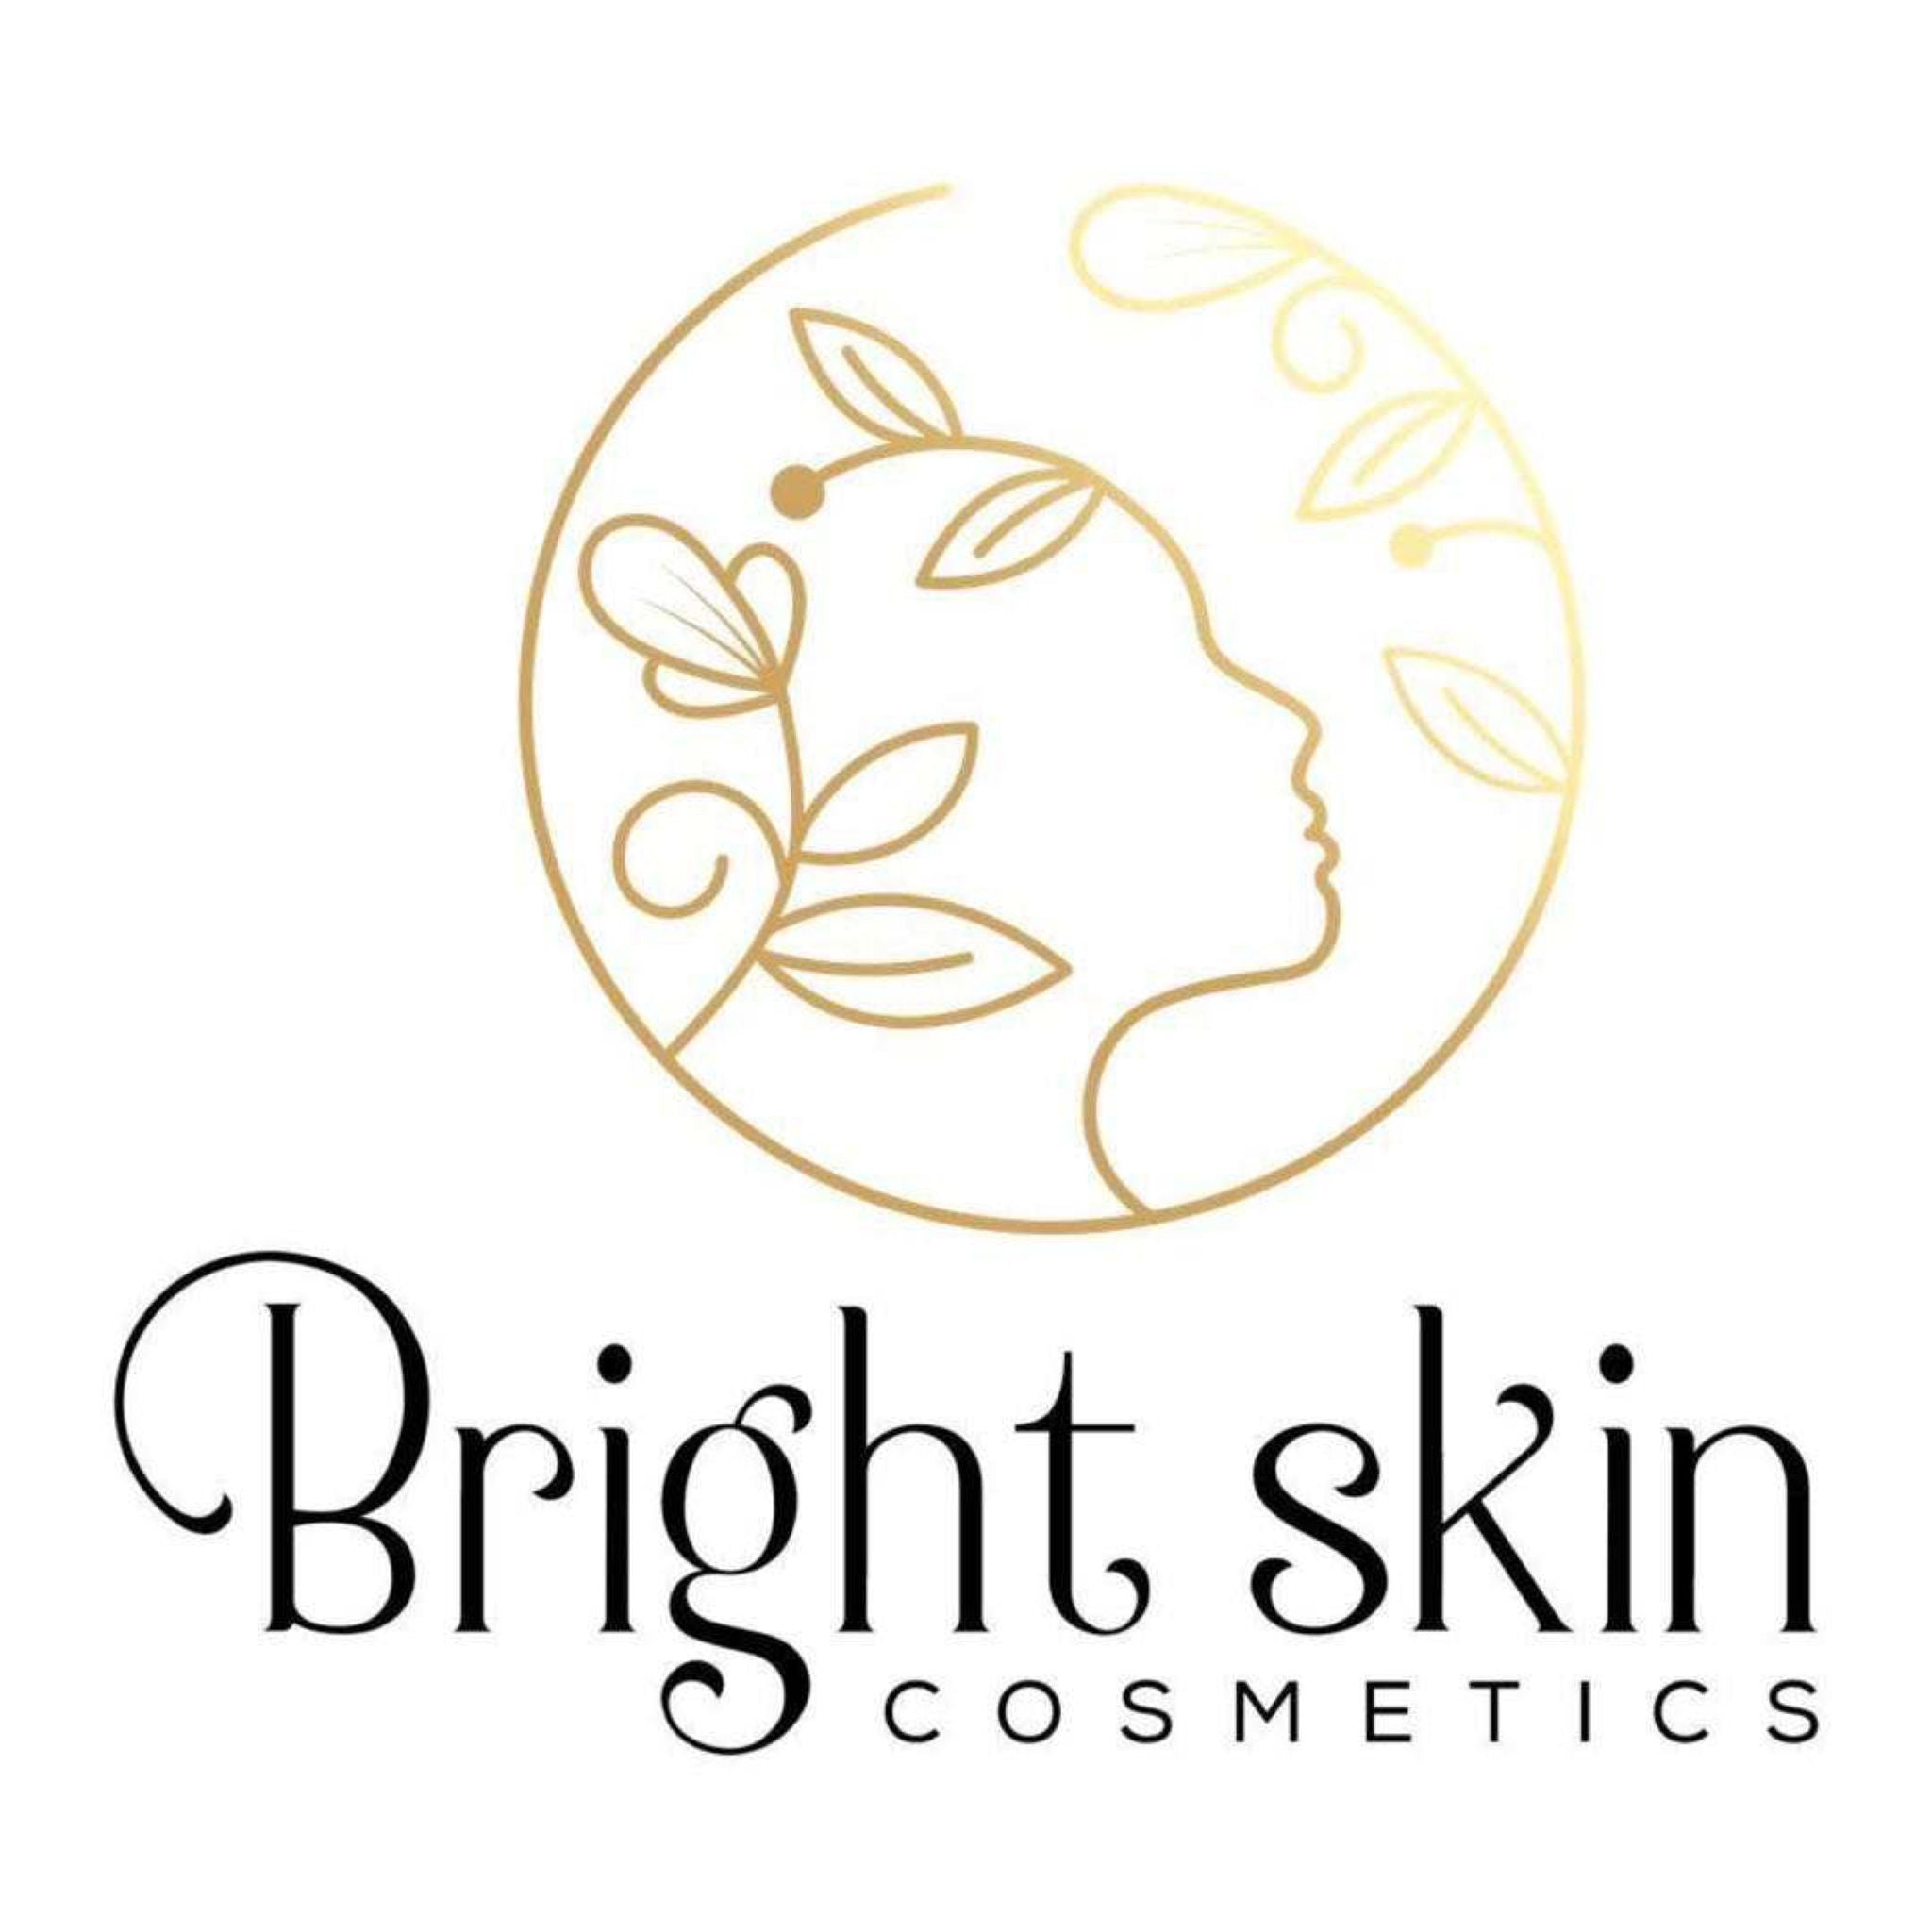 Bright Skin Cosmetics